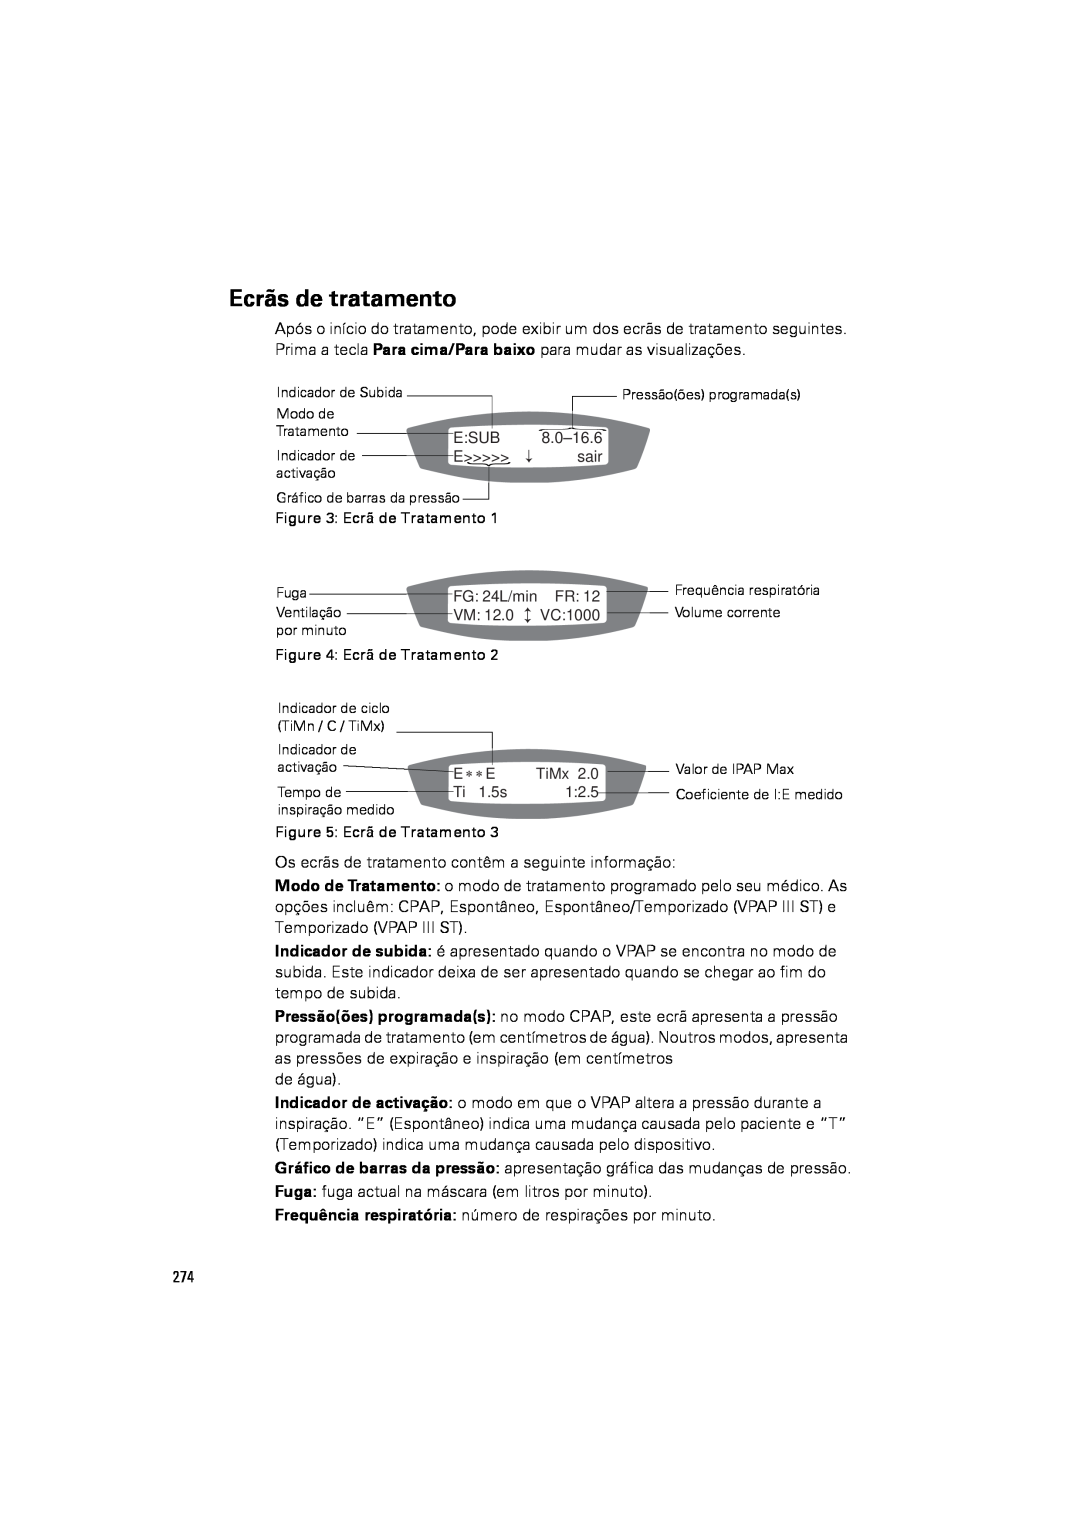 ResMed III & III ST user manual Ecrãs de tratamento 